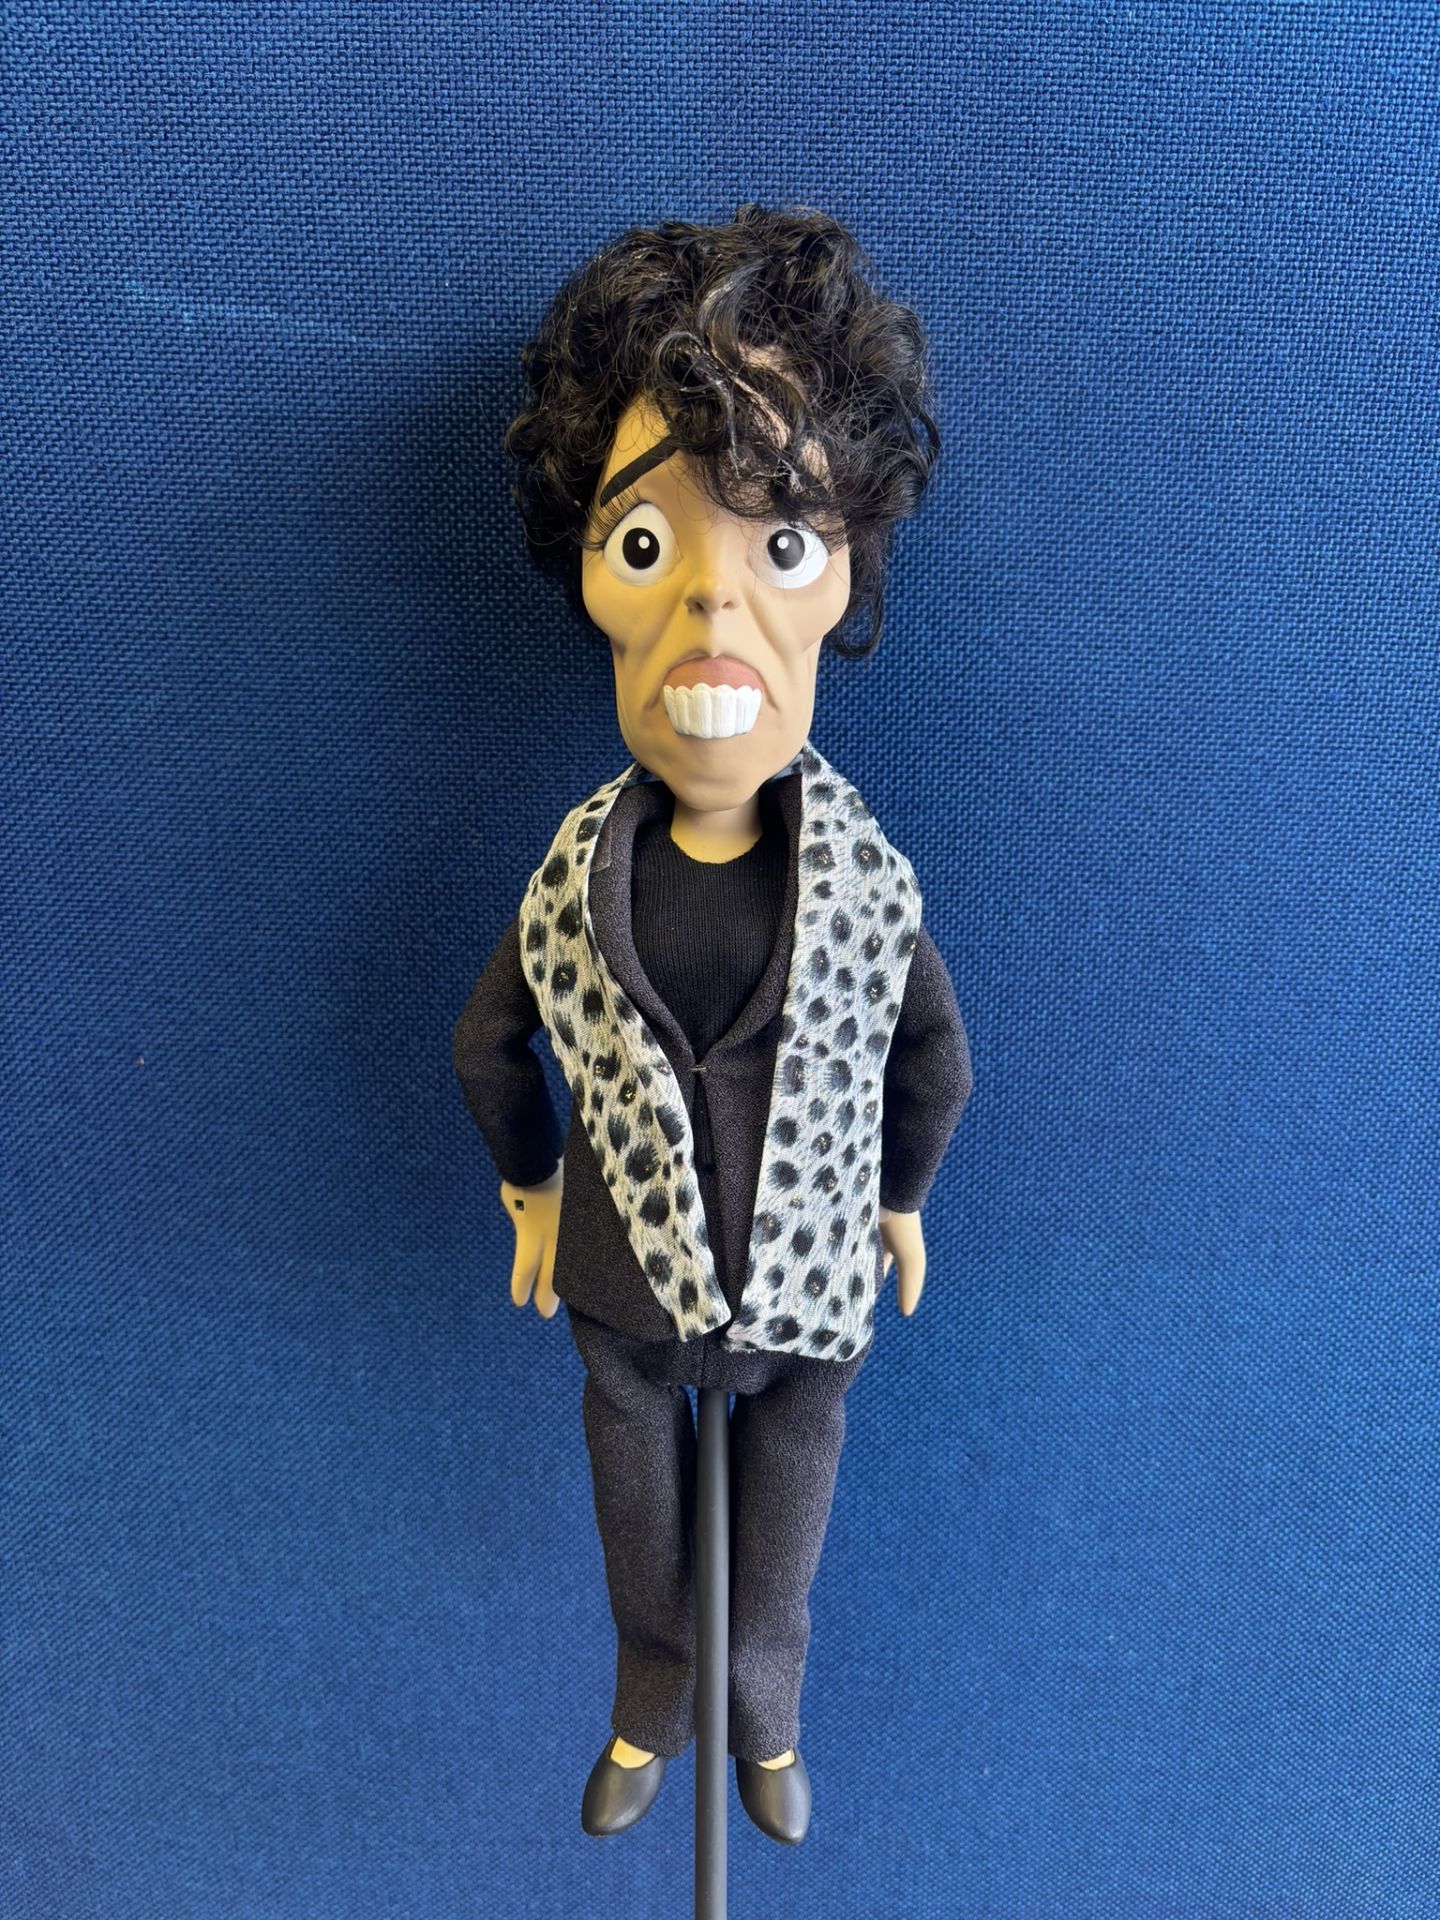 Newzoid puppet - Olivia Coleman - Image 2 of 5